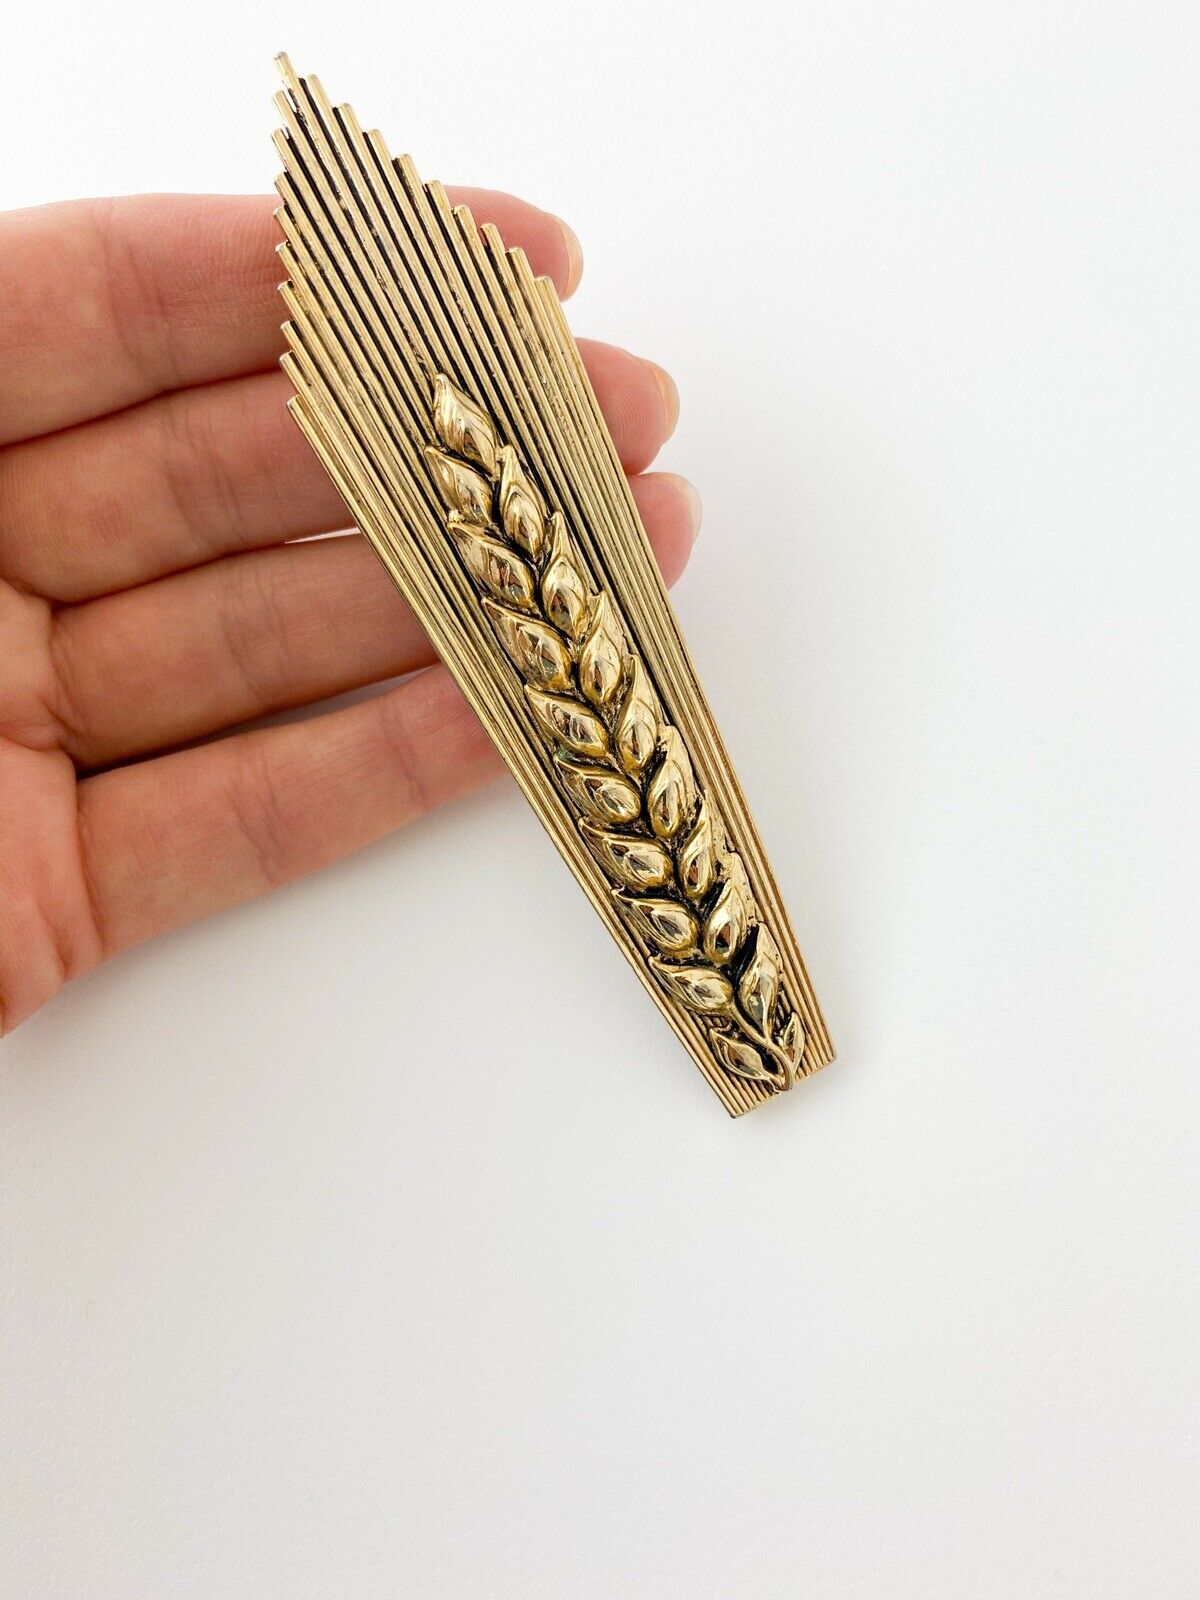 Kenzo Paris Vintage Brooch Pin Women Jewelry Gold